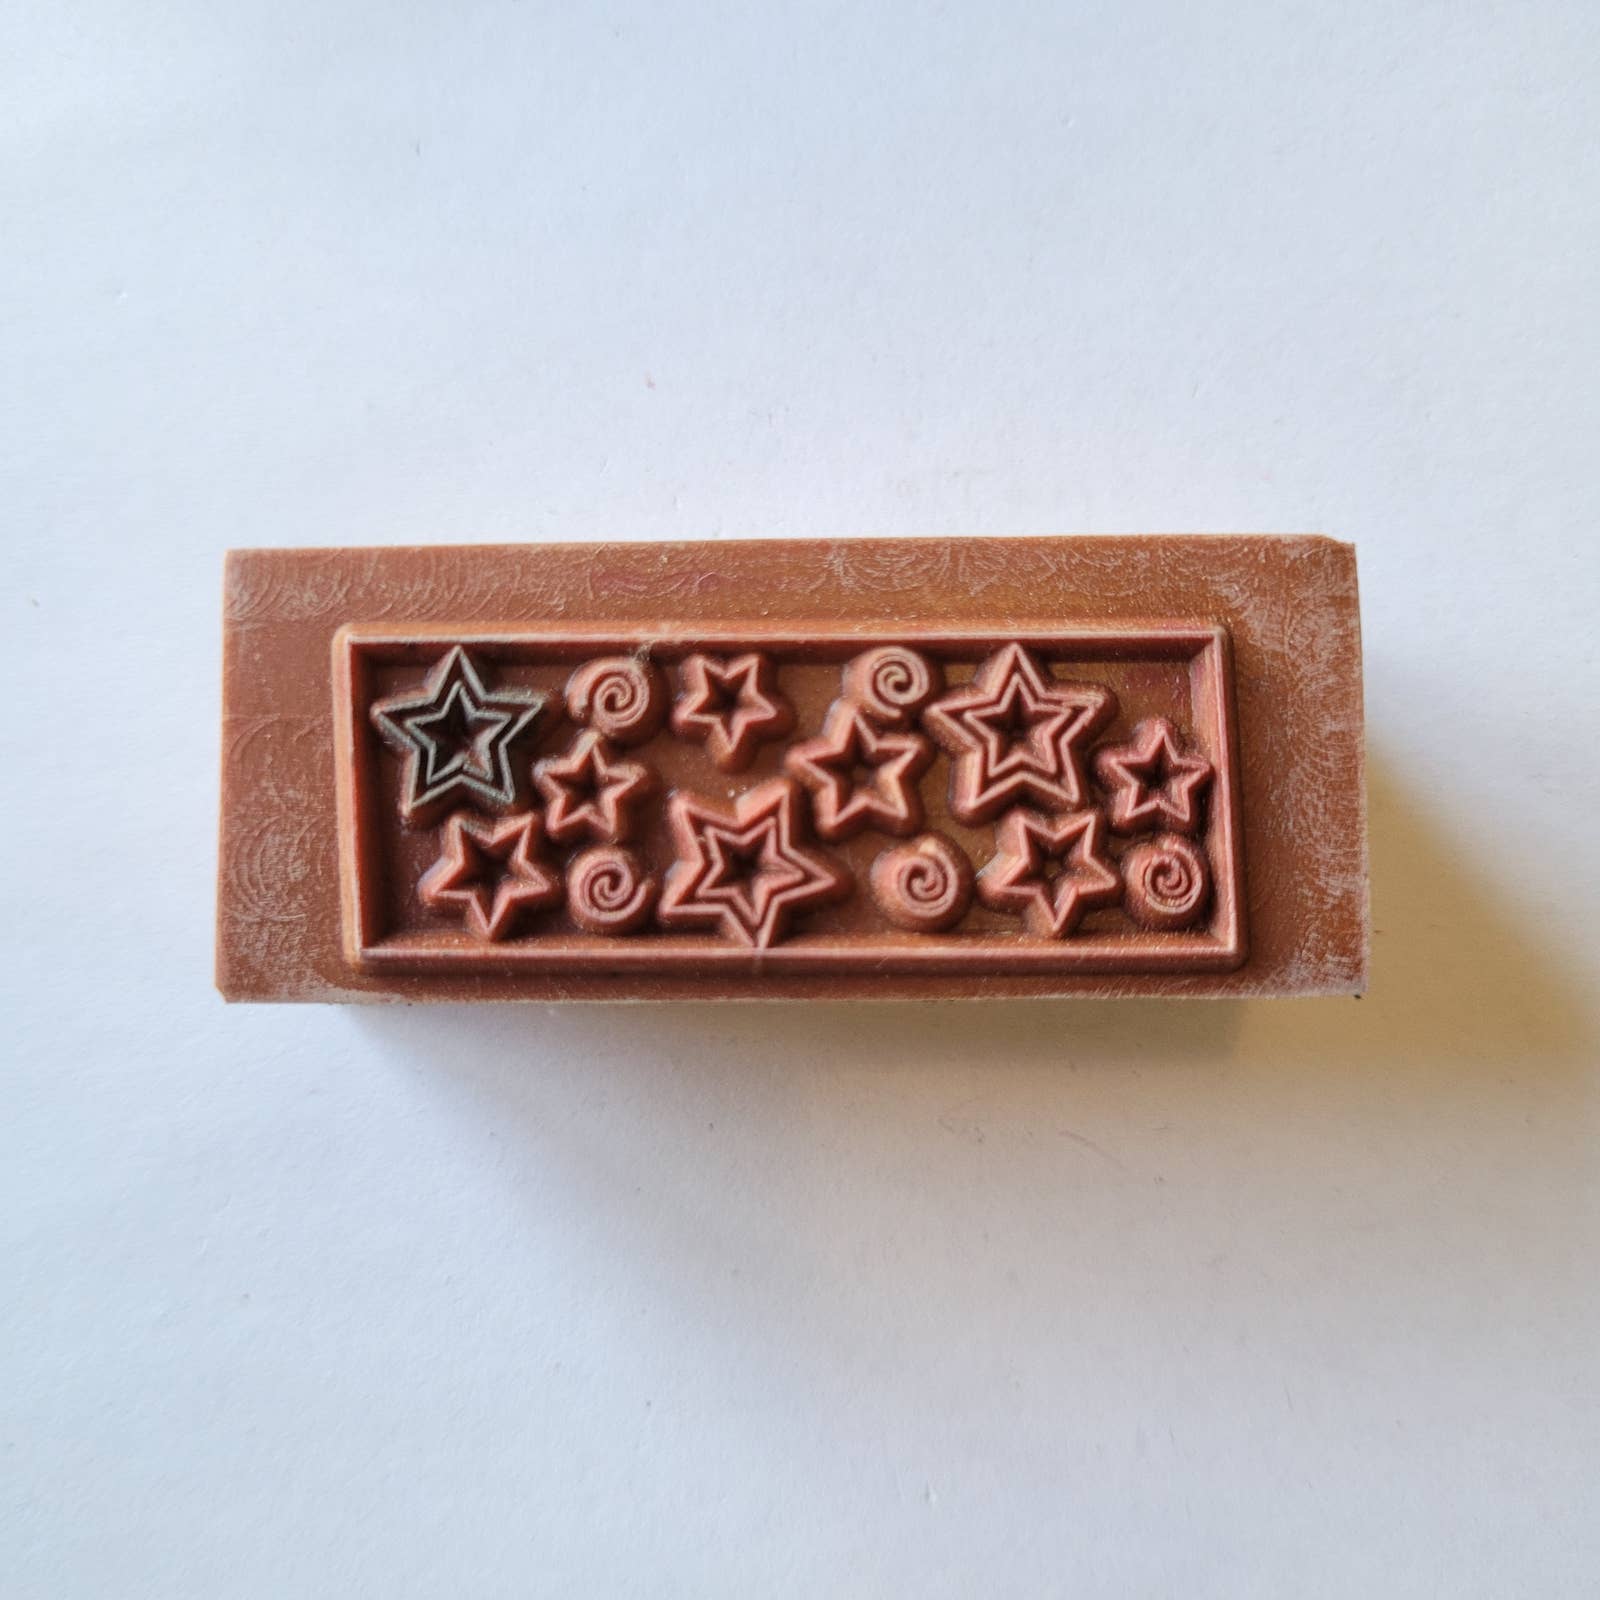 Vintage Rubber Stamp - Stars and SwirlsMarkita's ClosetUnbranded